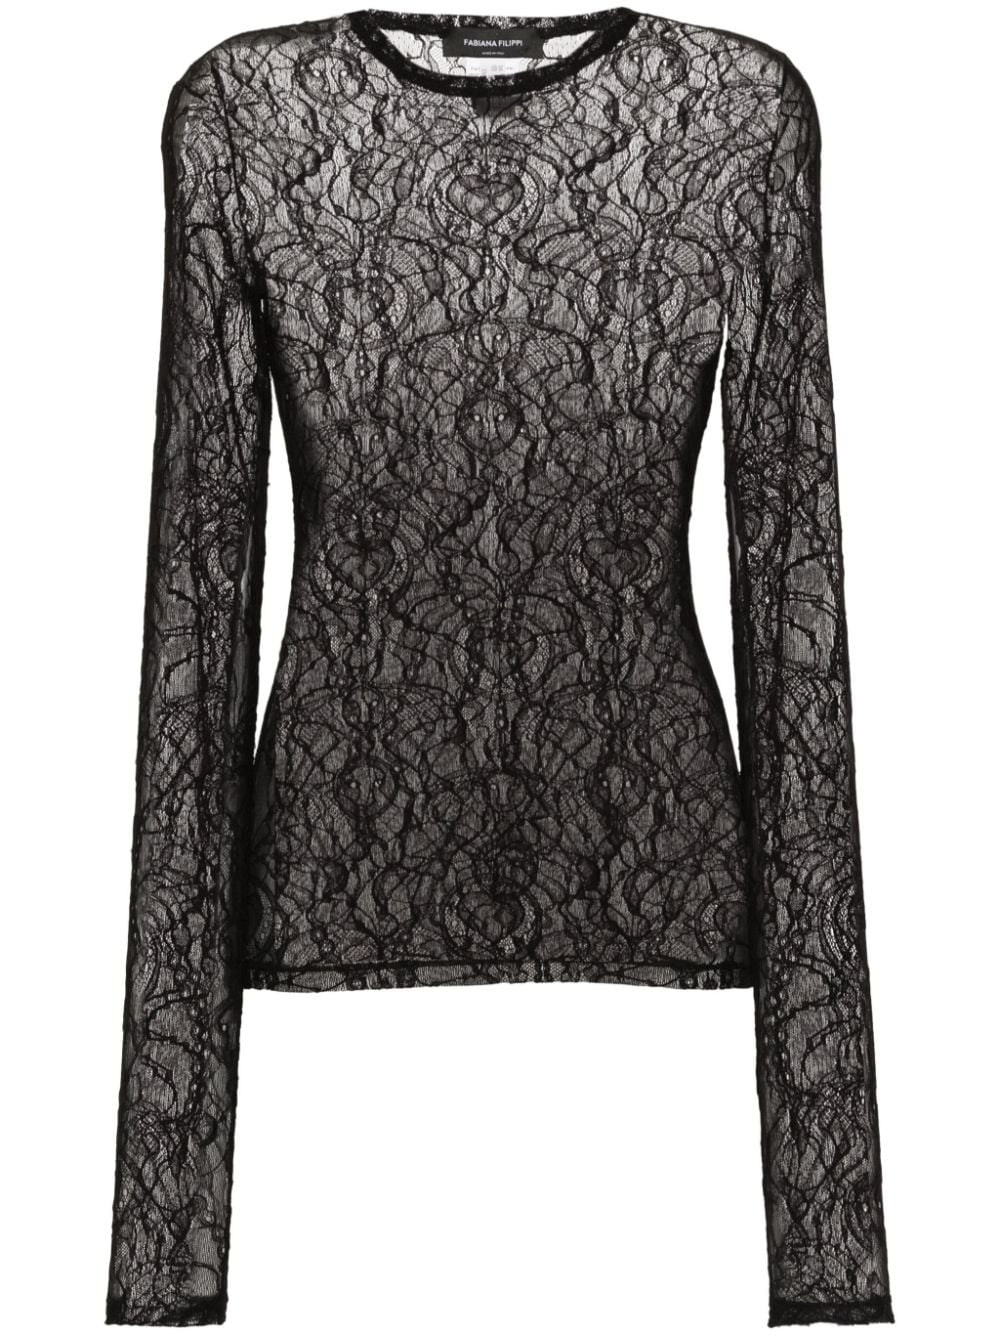 Fabiana Filippi semi-sheer lace blouse - Black von Fabiana Filippi